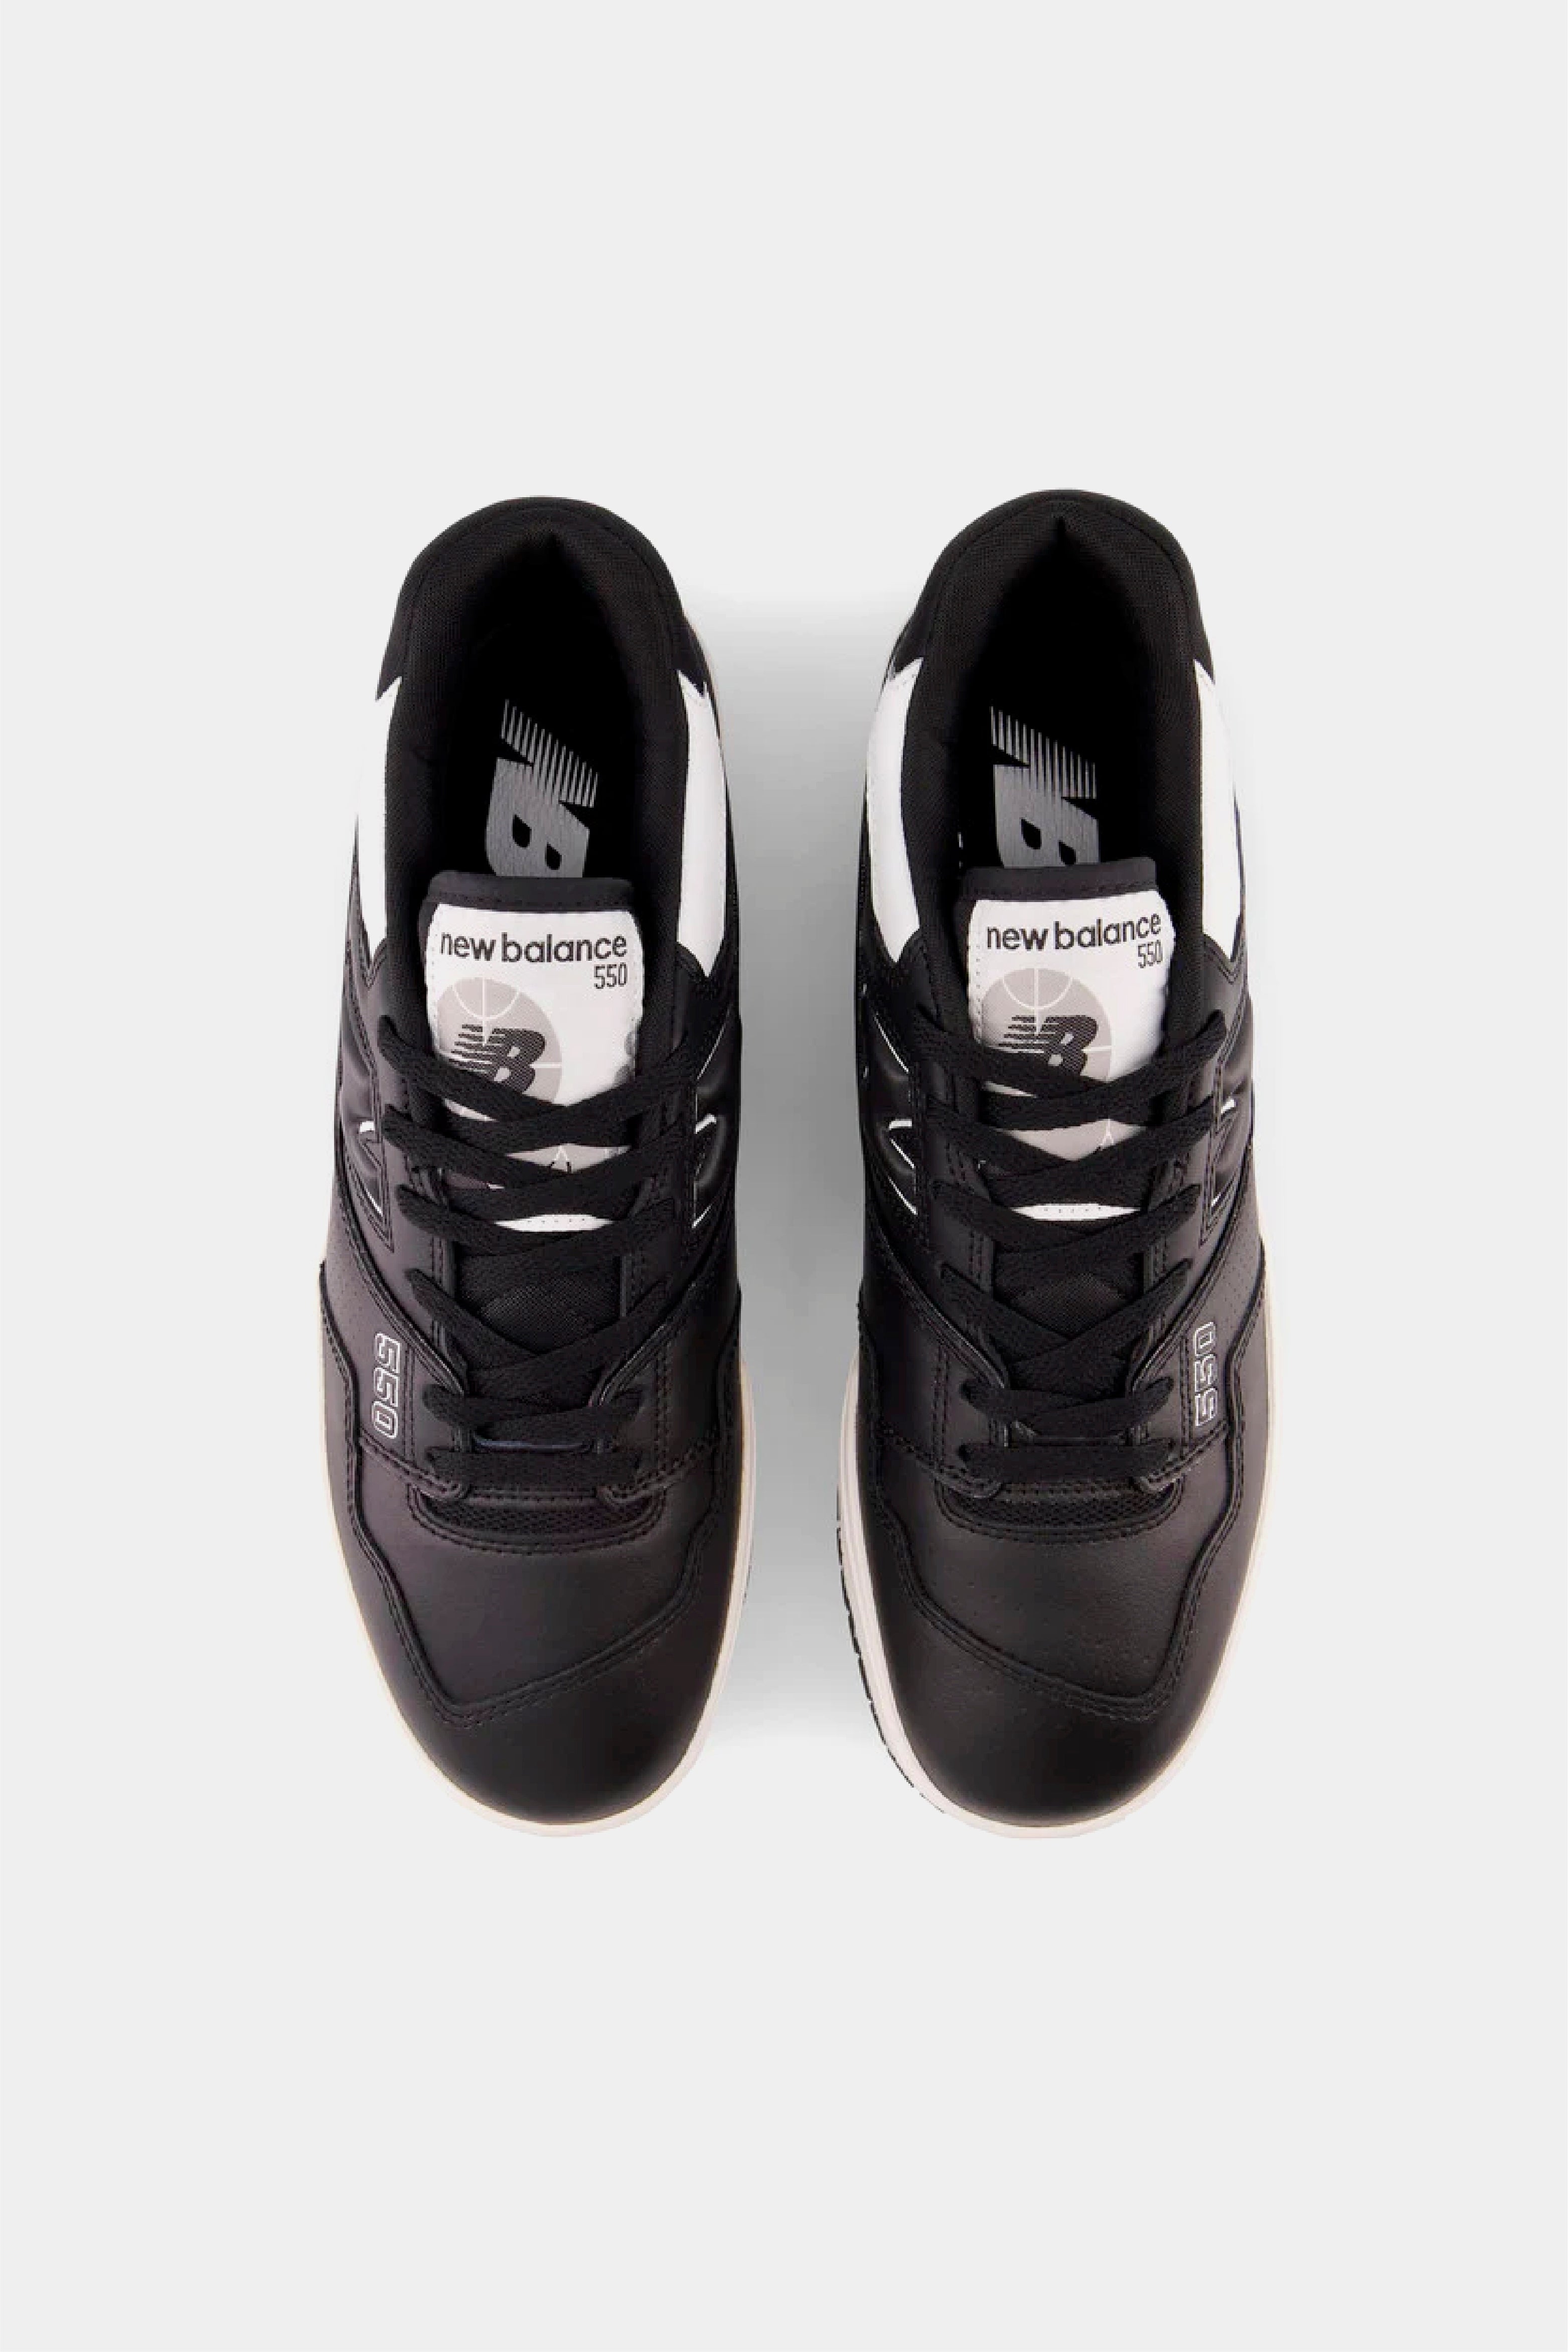 Selectshop FRAME - NEW BALANCE New Balance 550 "Black White" Footwear Dubai